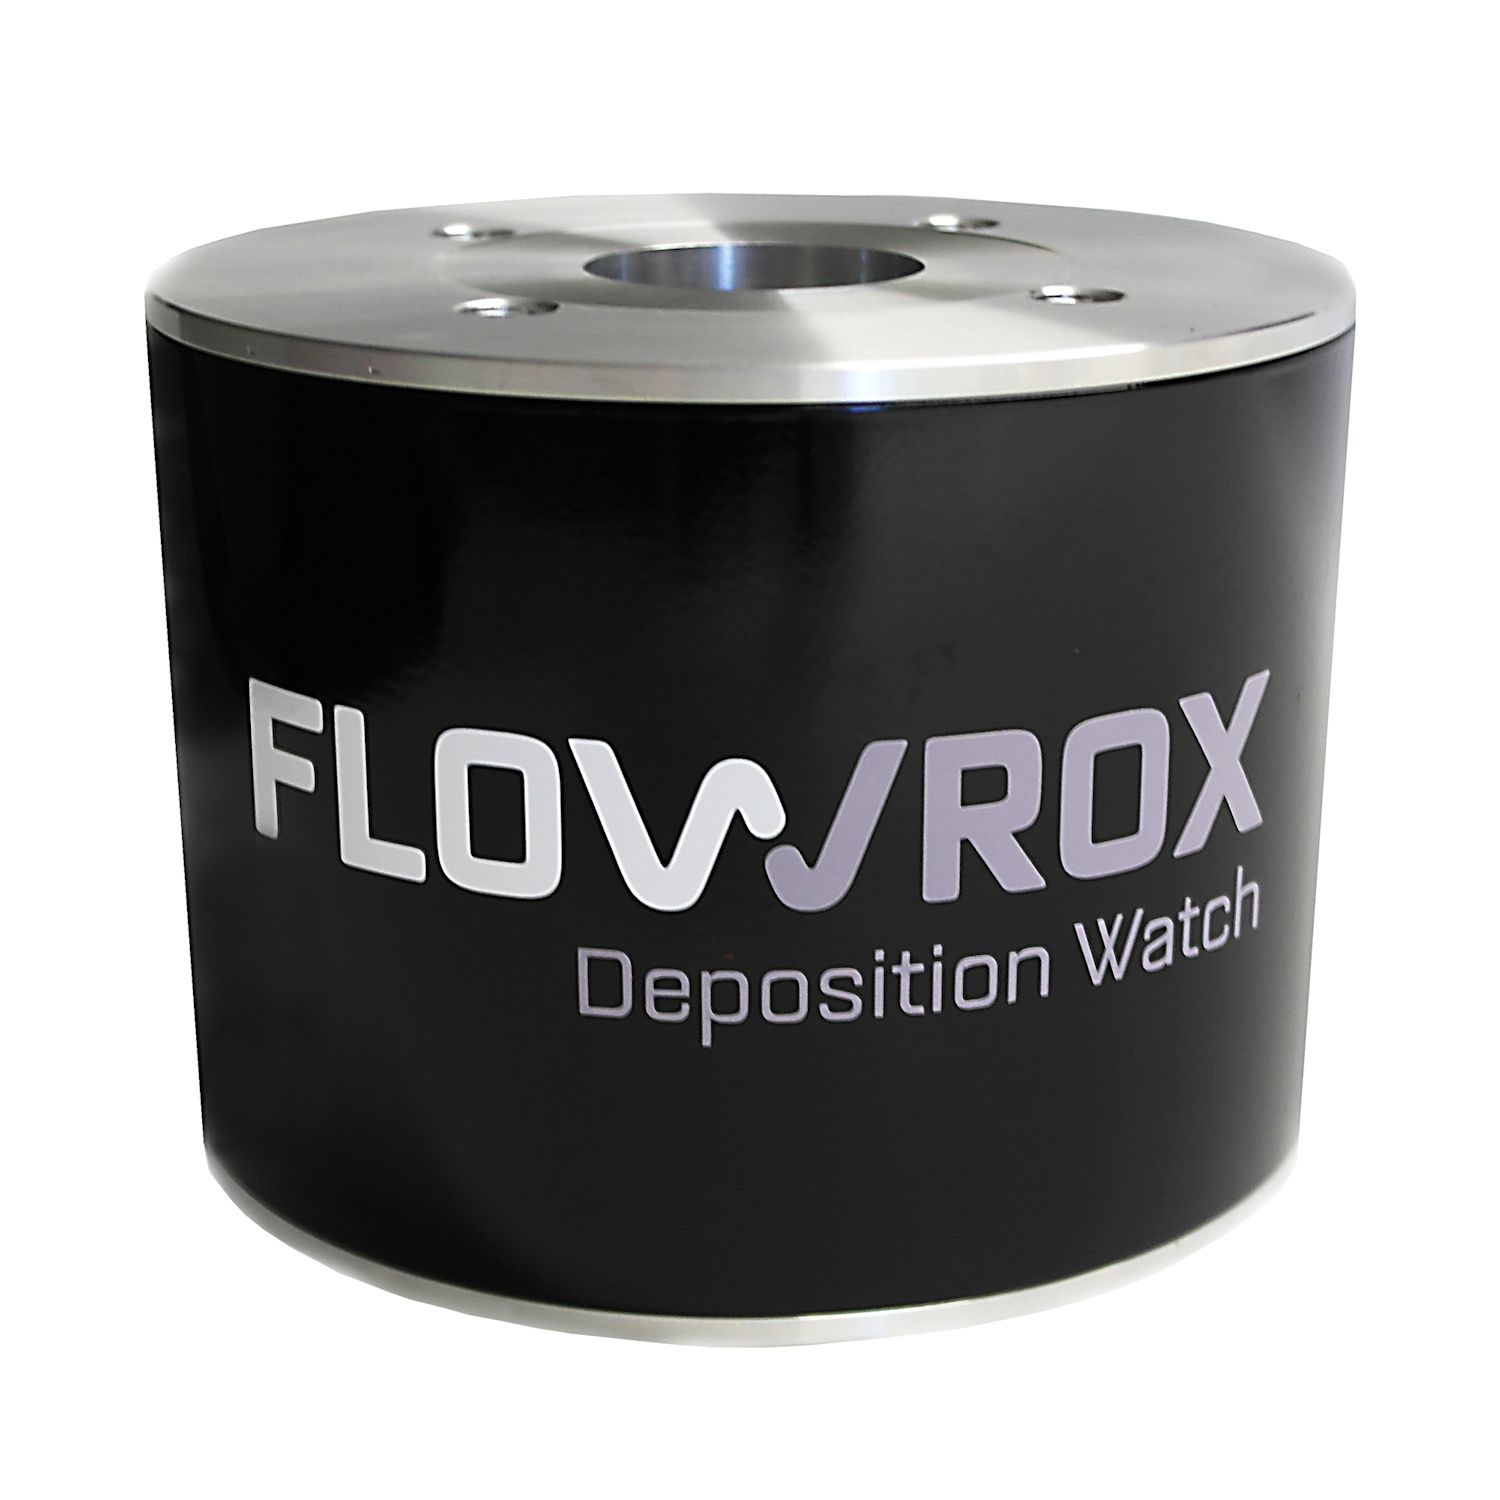 Flowrox Deposition Watch (Print Quality)